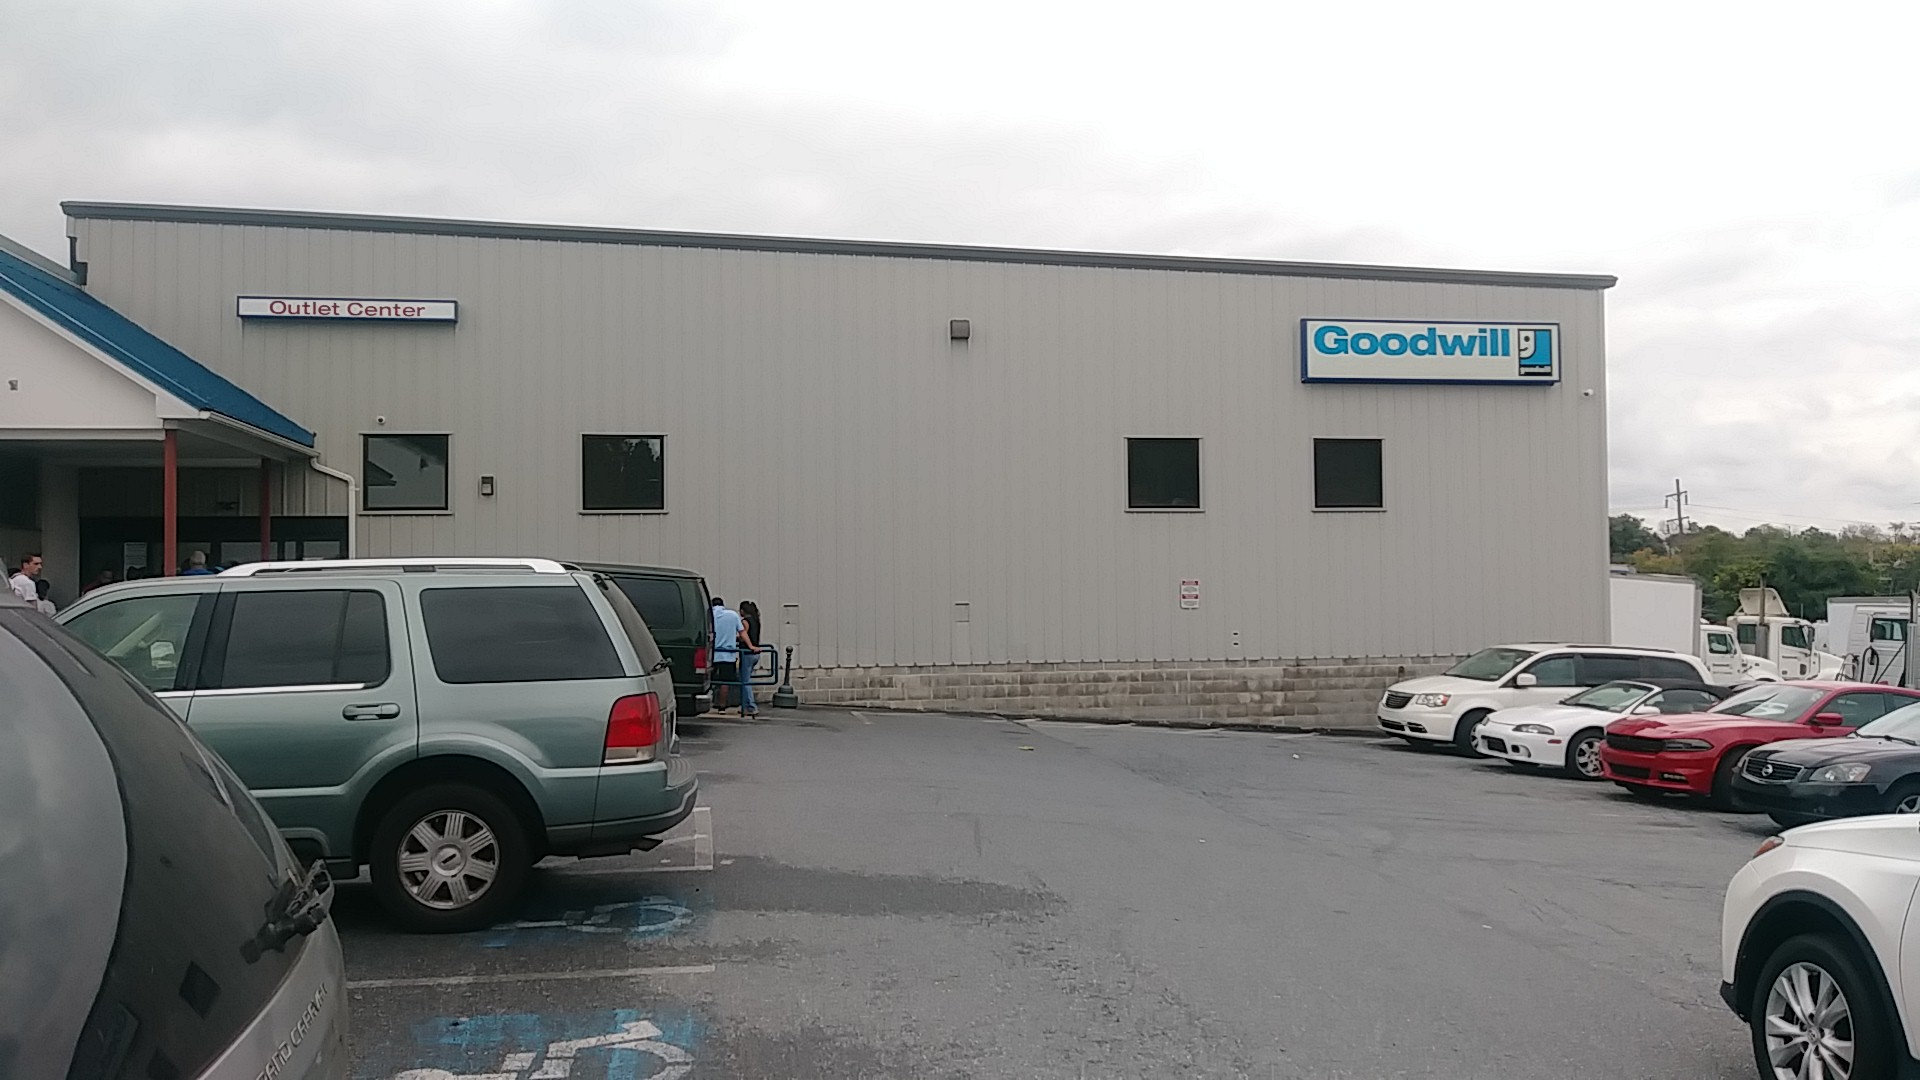 Goodwill Outlet Center & Donation Center